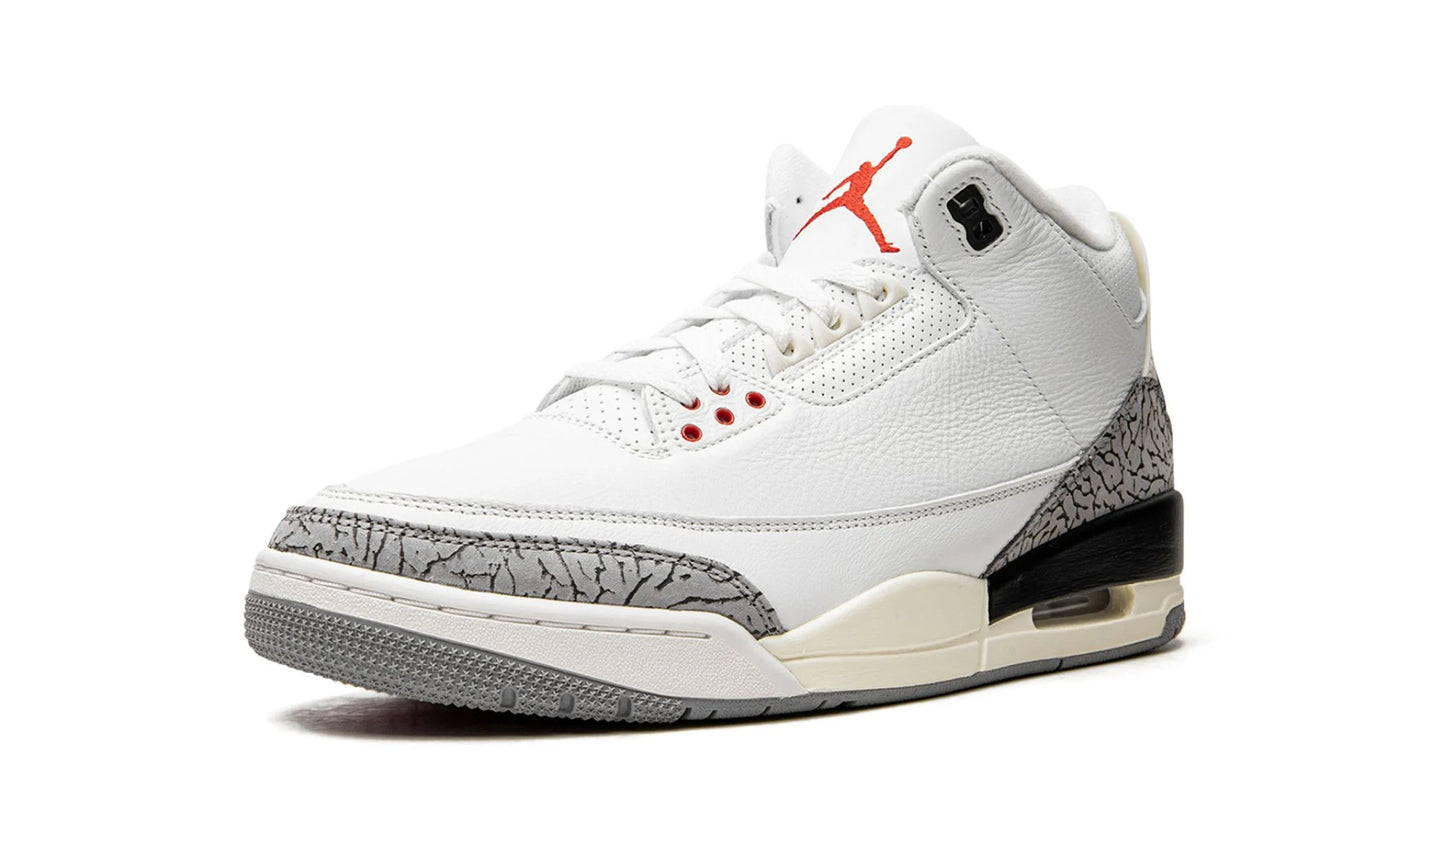 Jordan 3 White Cement Reimagined Single Shoe Front View